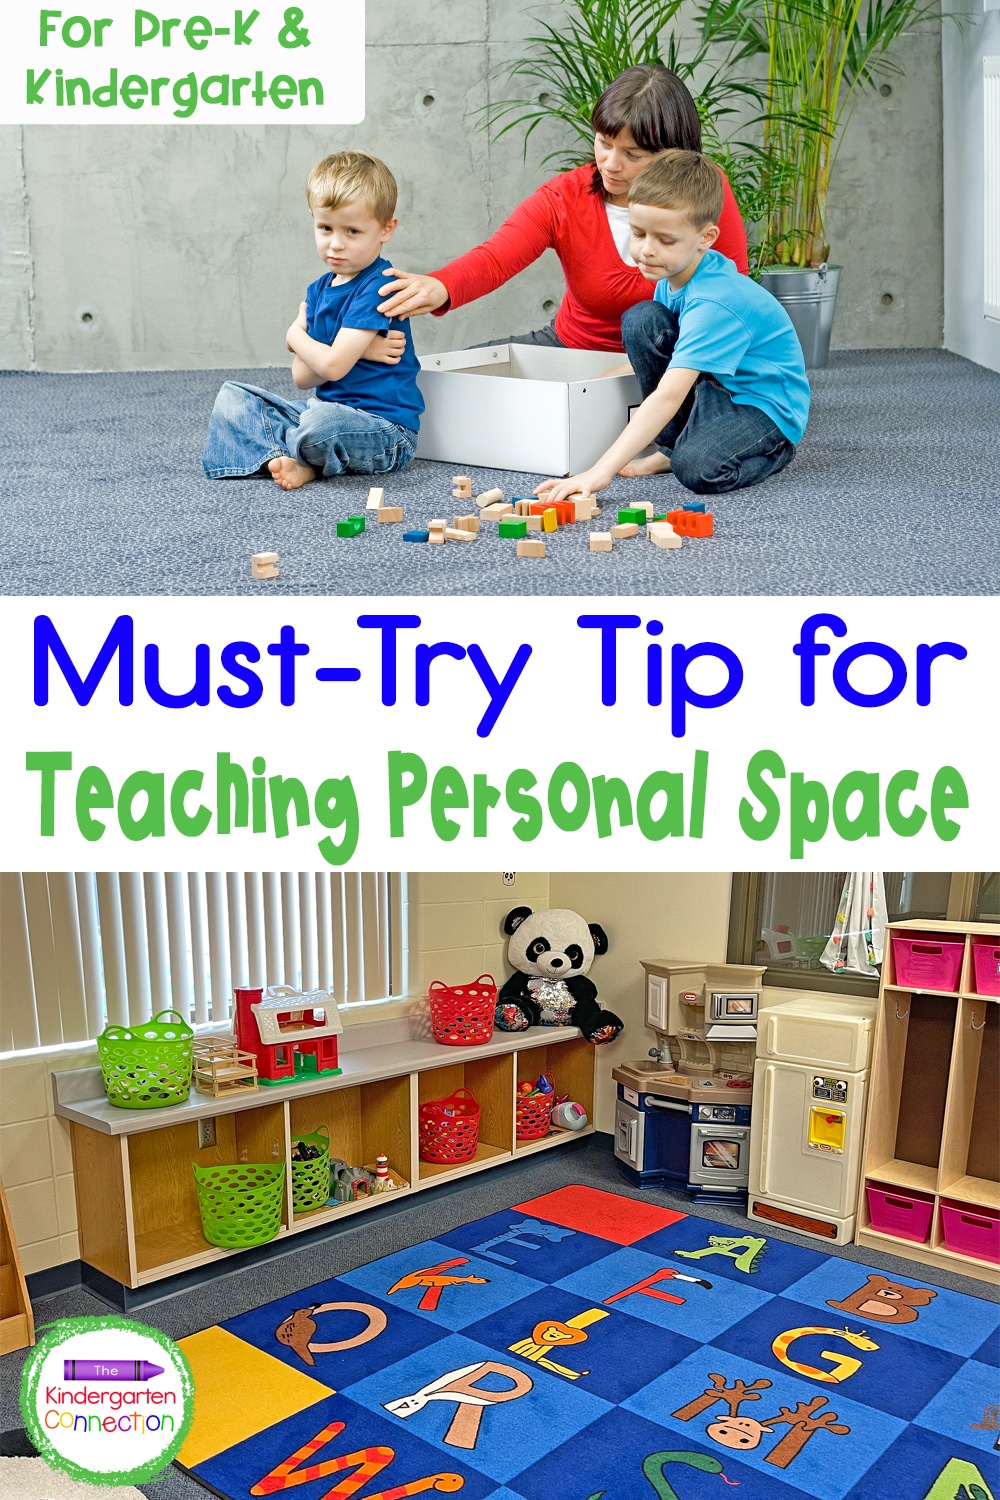 Must-Try Tip for Teaching Personal Space in Pre-K & Kindergarten